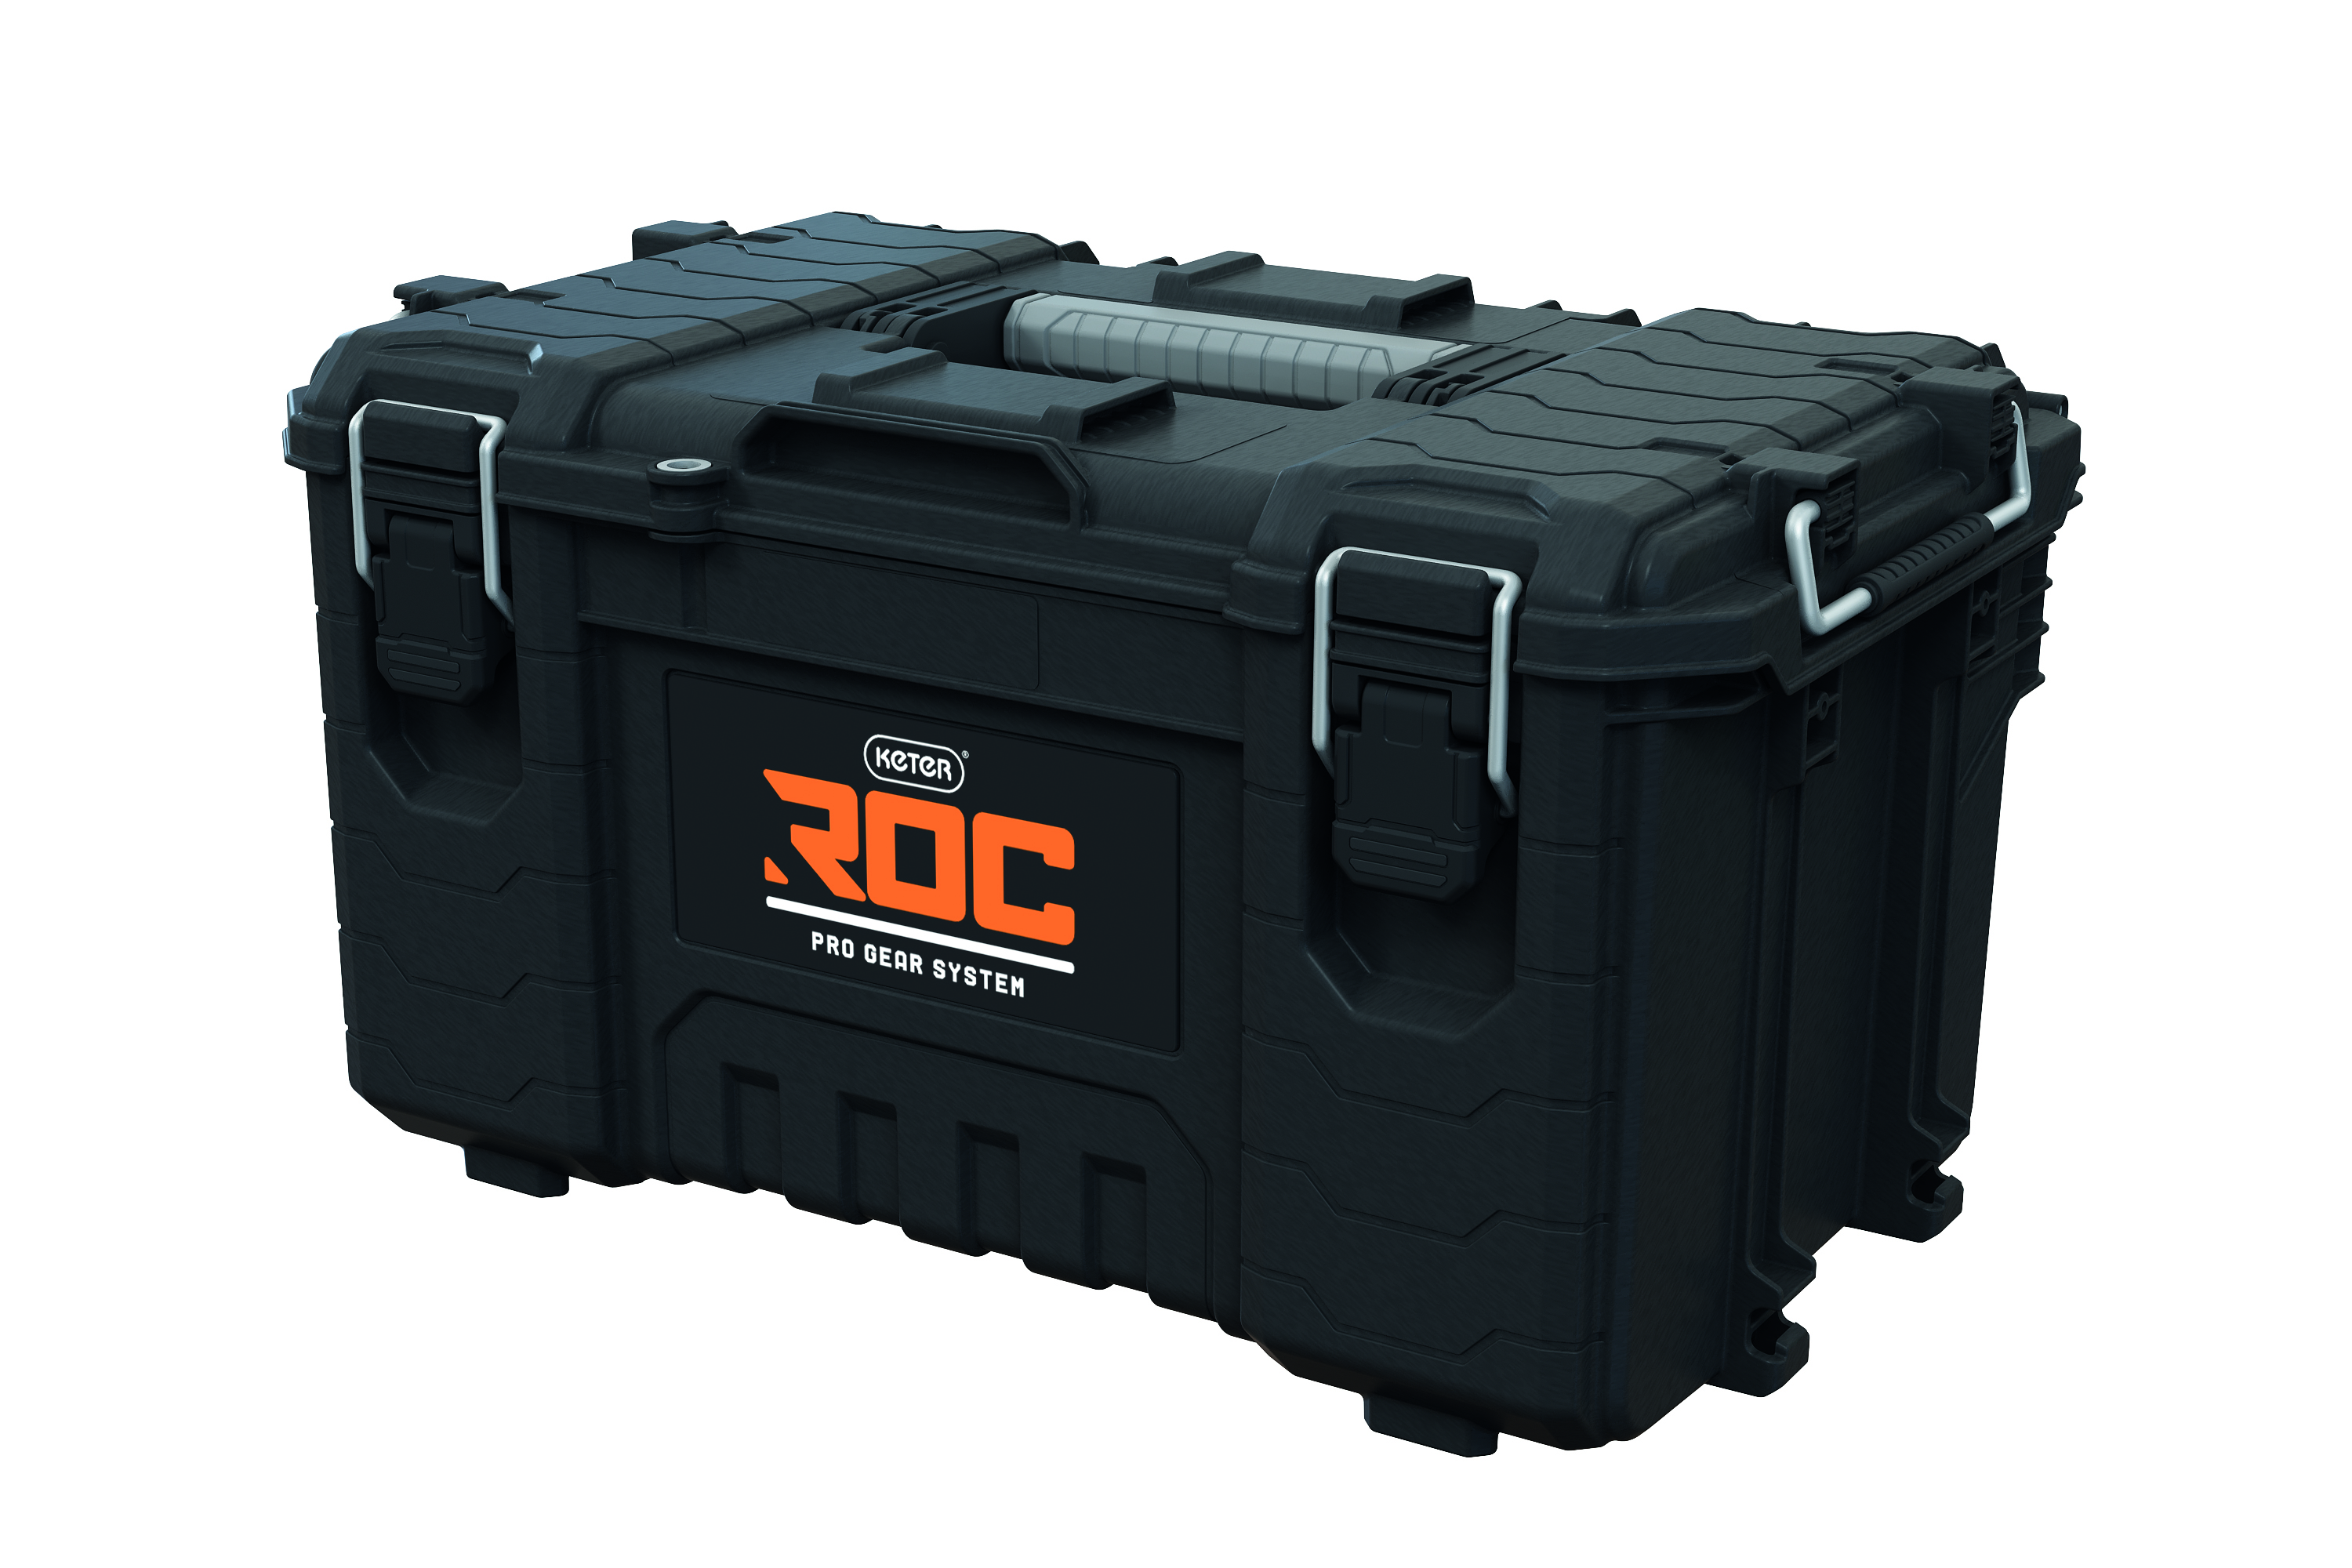 KETER Box Keter ROC Pro Gear 2.0 Tool box